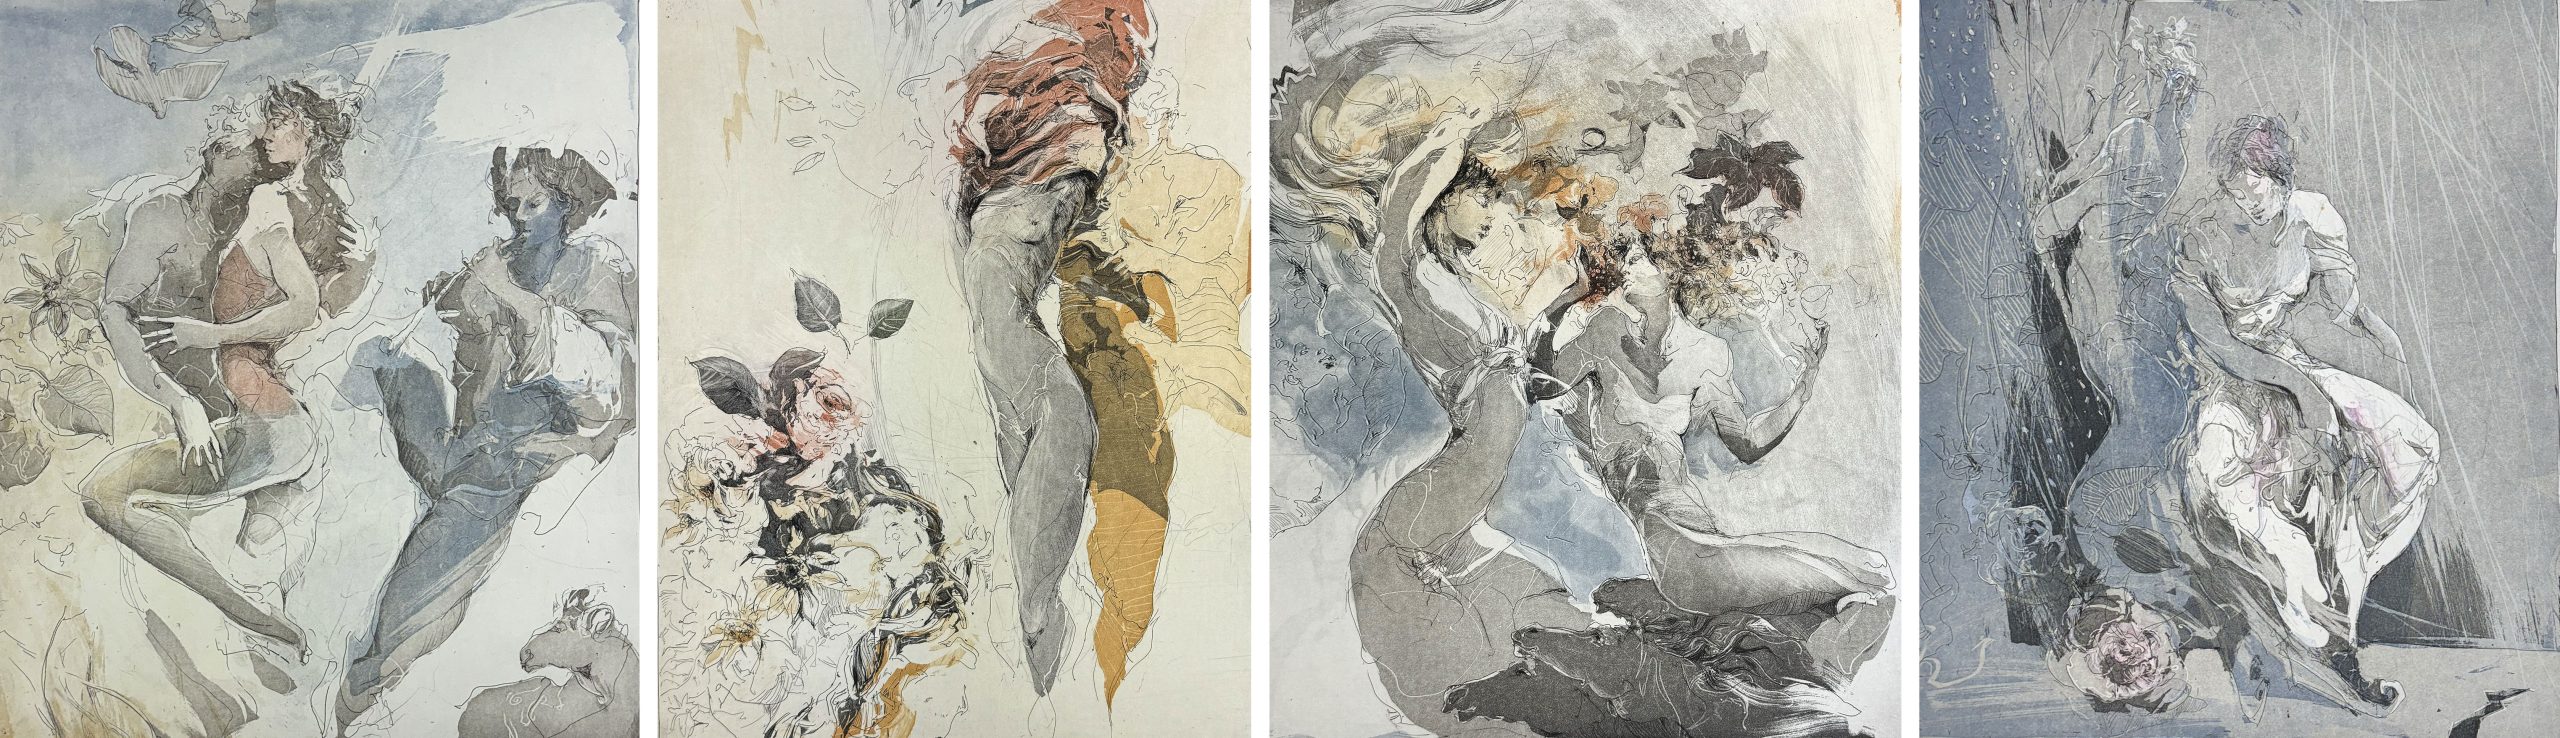 Jurgen Gorg Vivaldi Seasons etchings: Spring, Summer, Autumn, Winter